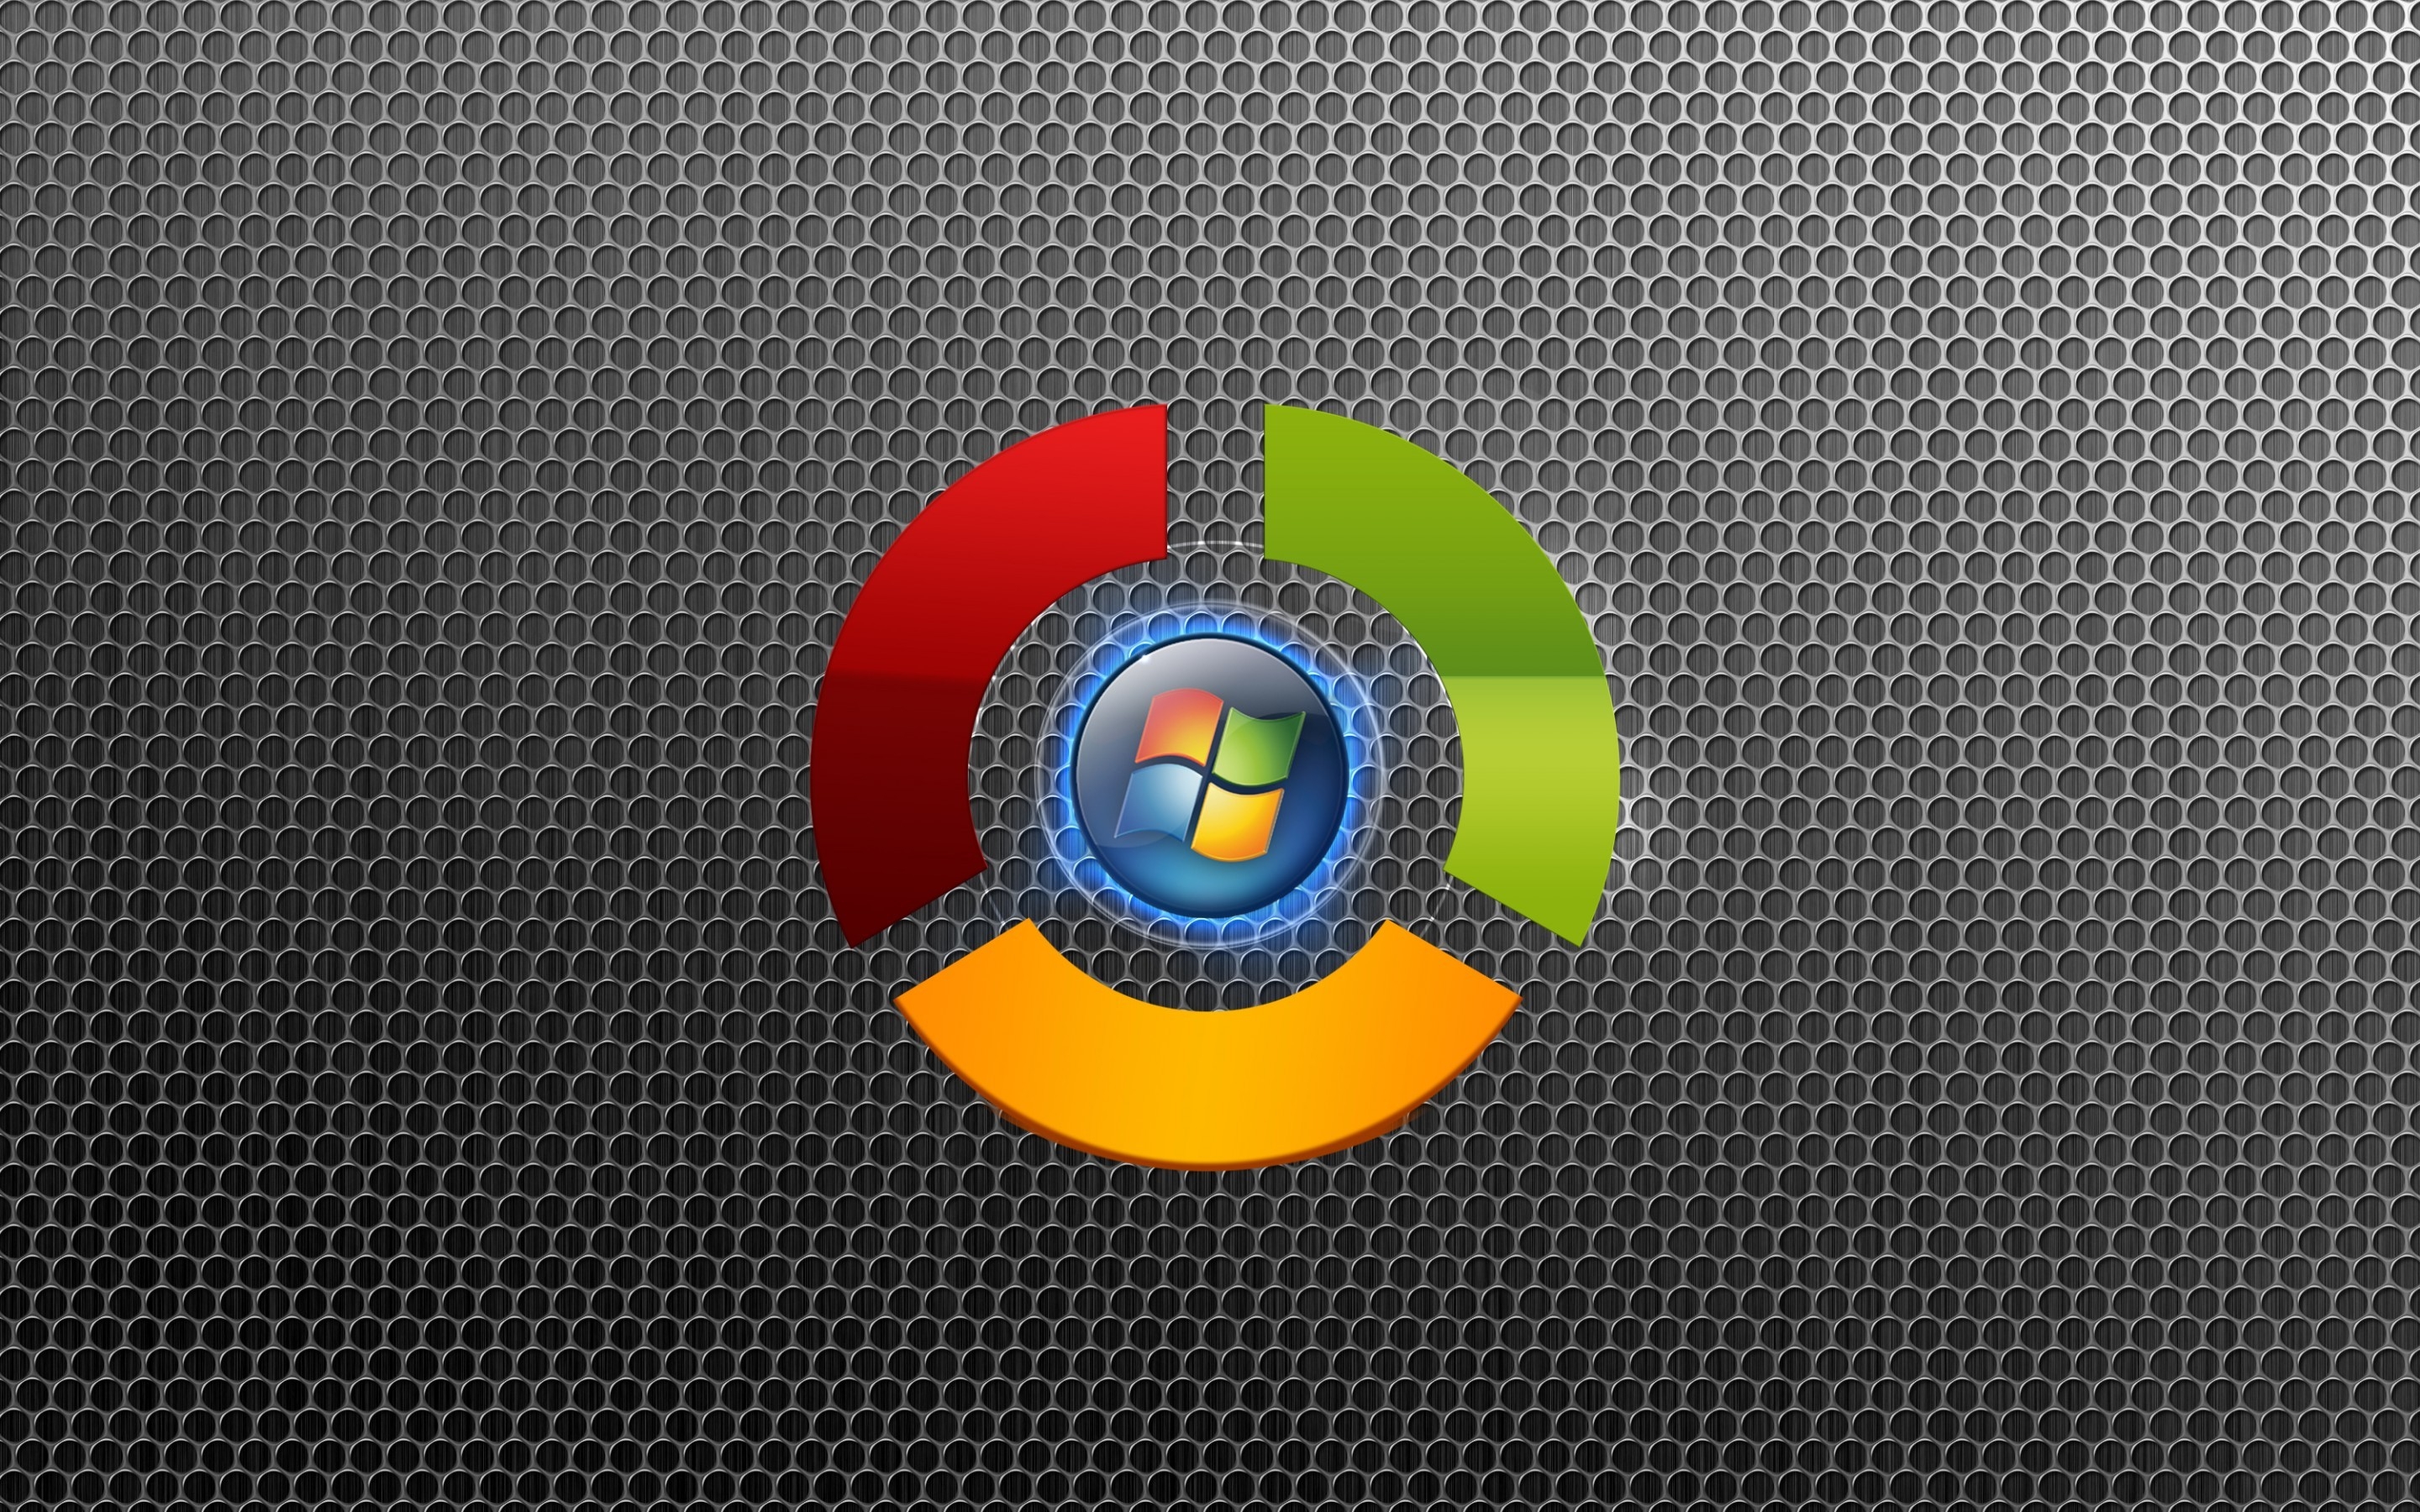 Google Chrome and Windows for 2880 x 1800 Retina Display resolution